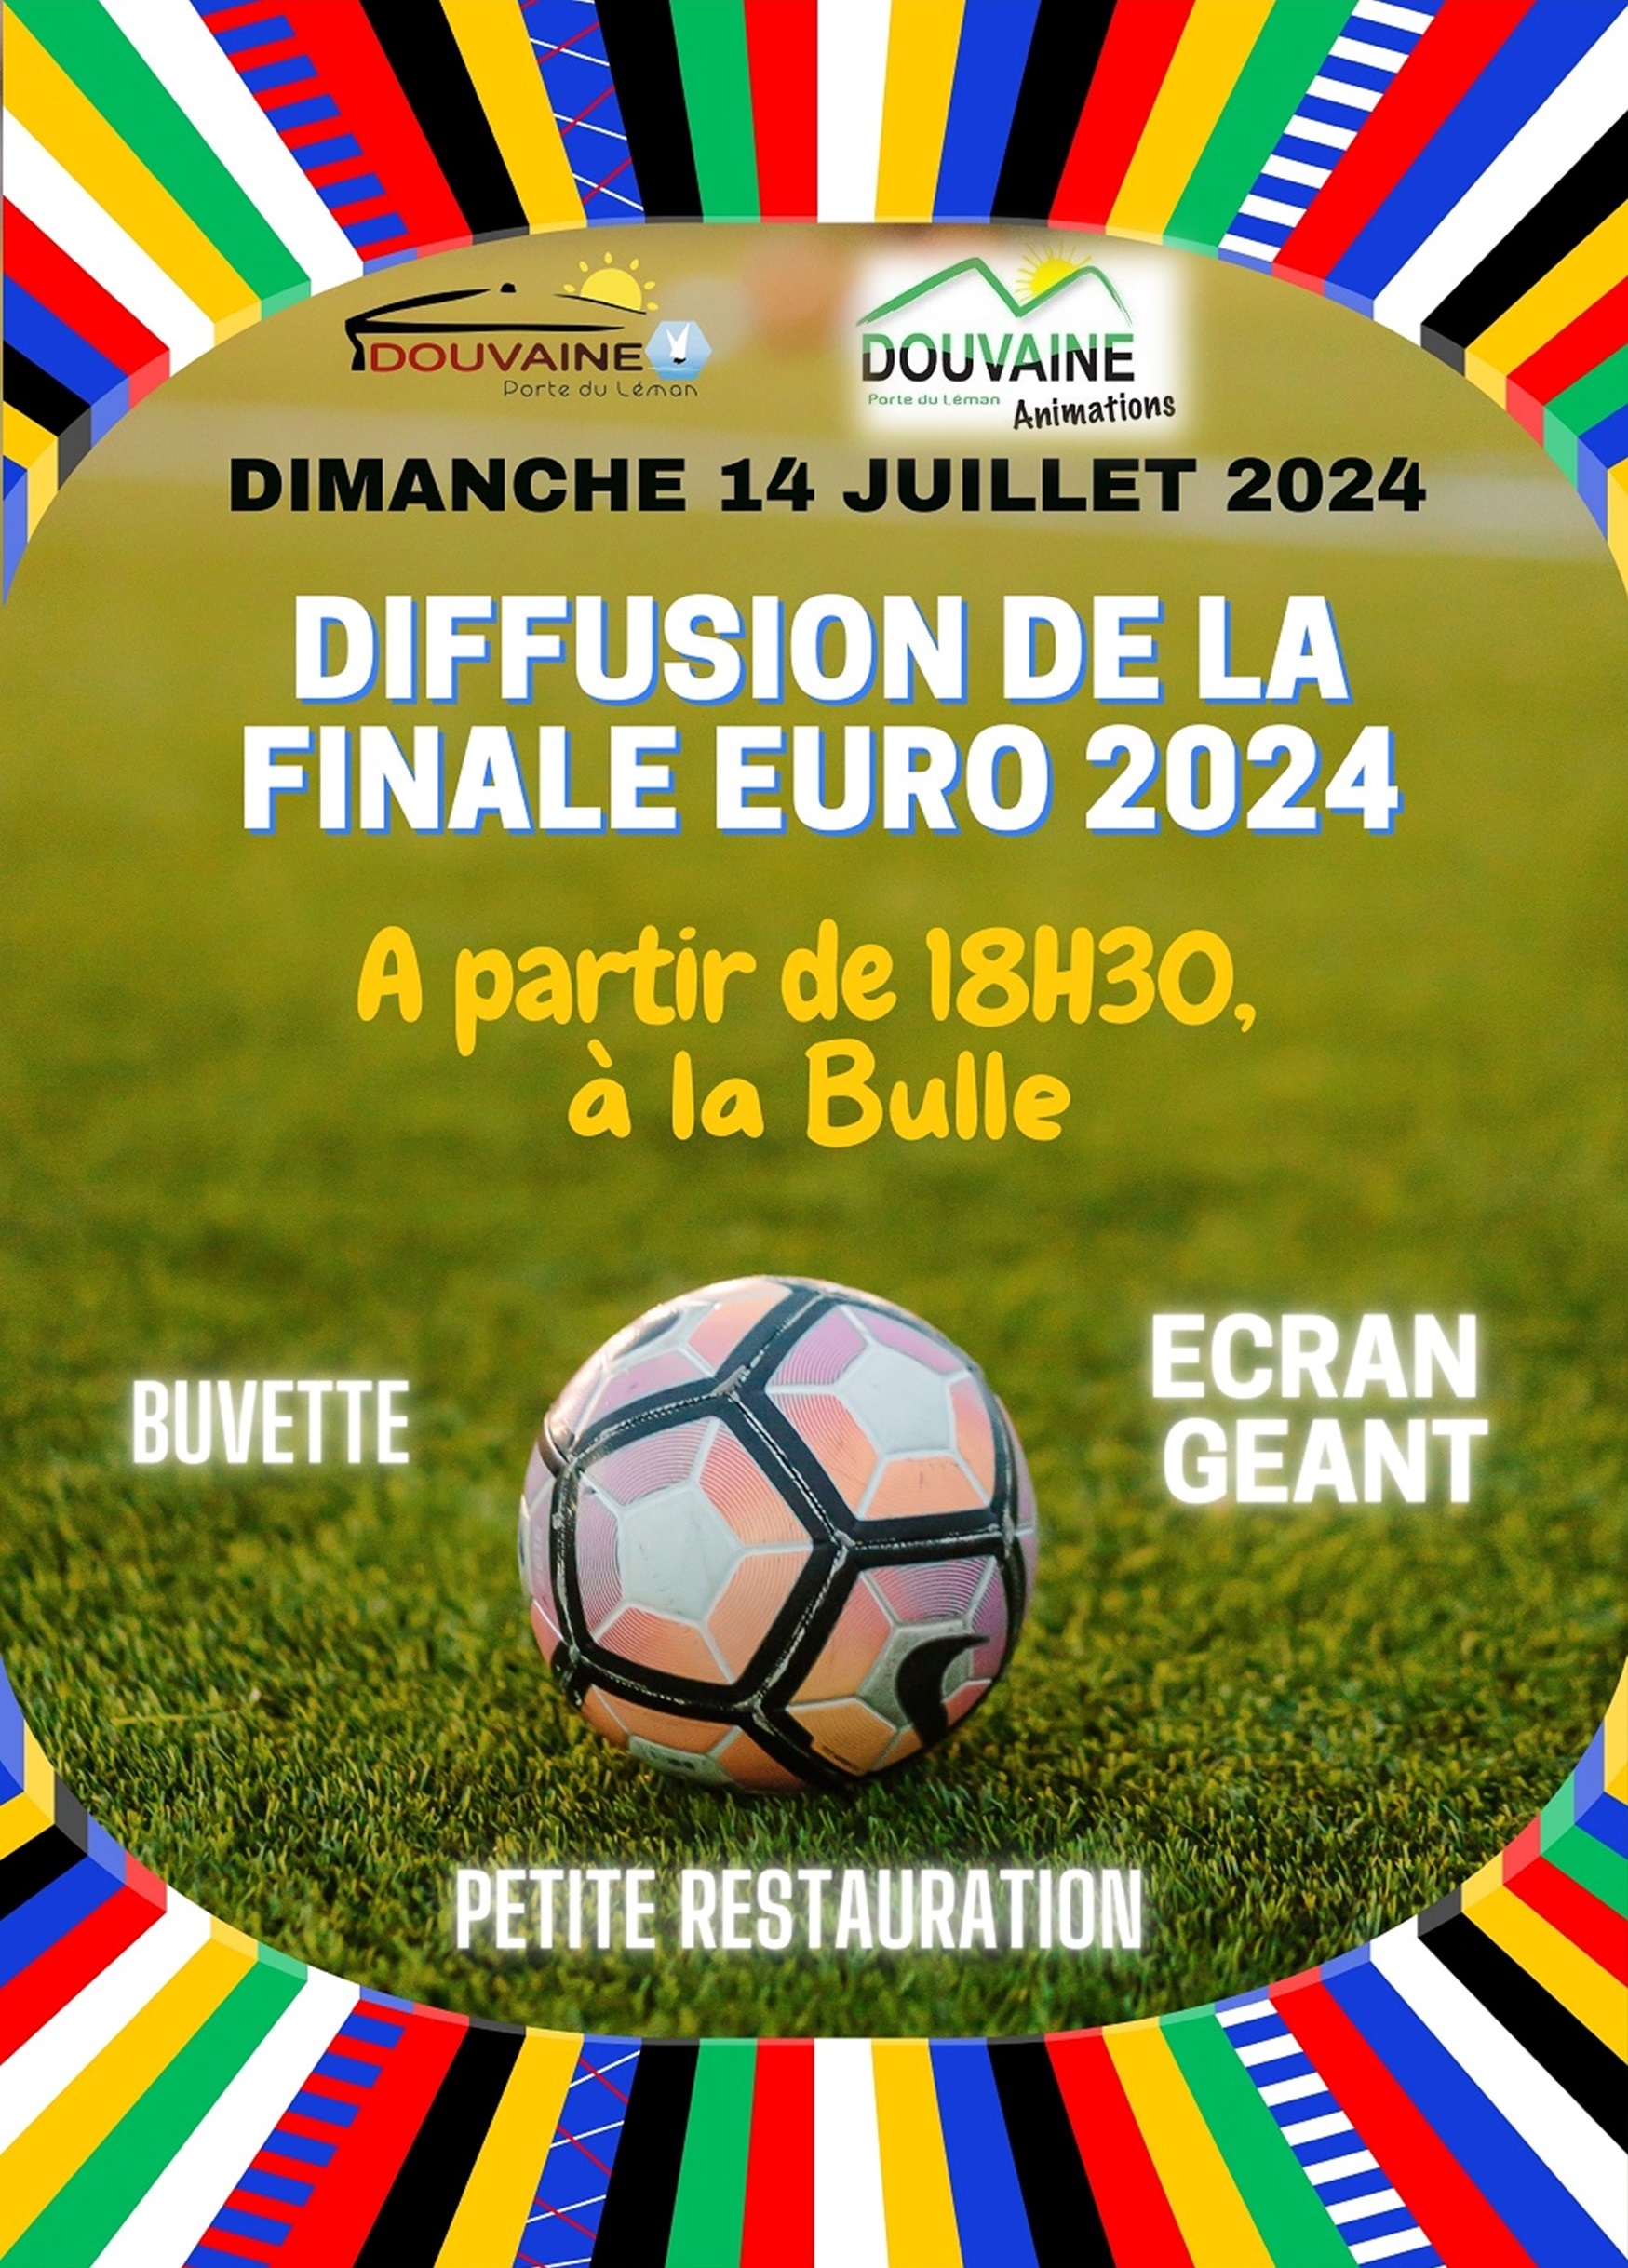 Diffusion de la finale Eurofoot 2024